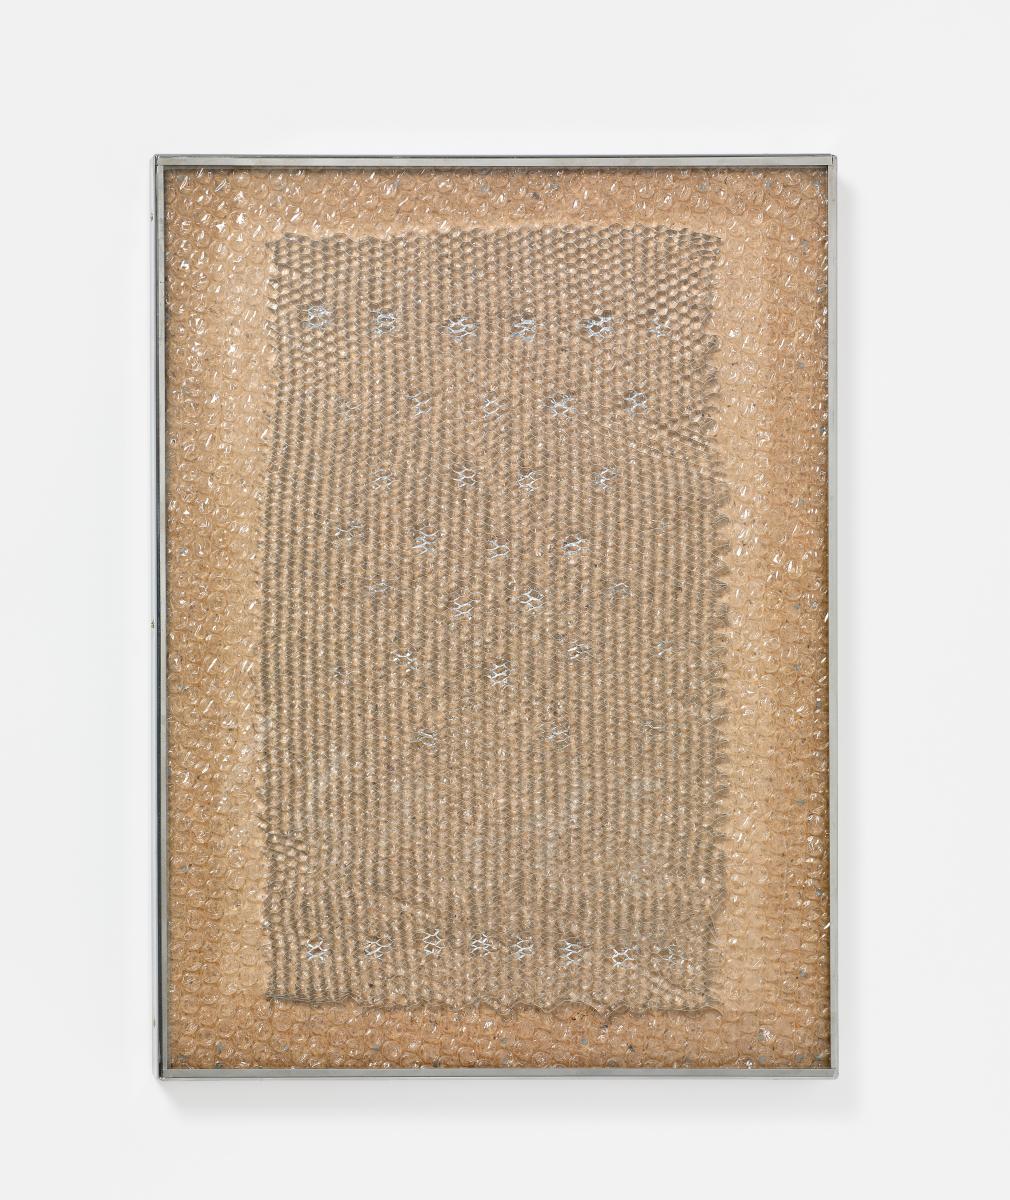 Heinz Mack - Kleine Flagge, 54915-2, Van Ham Kunstauktionen